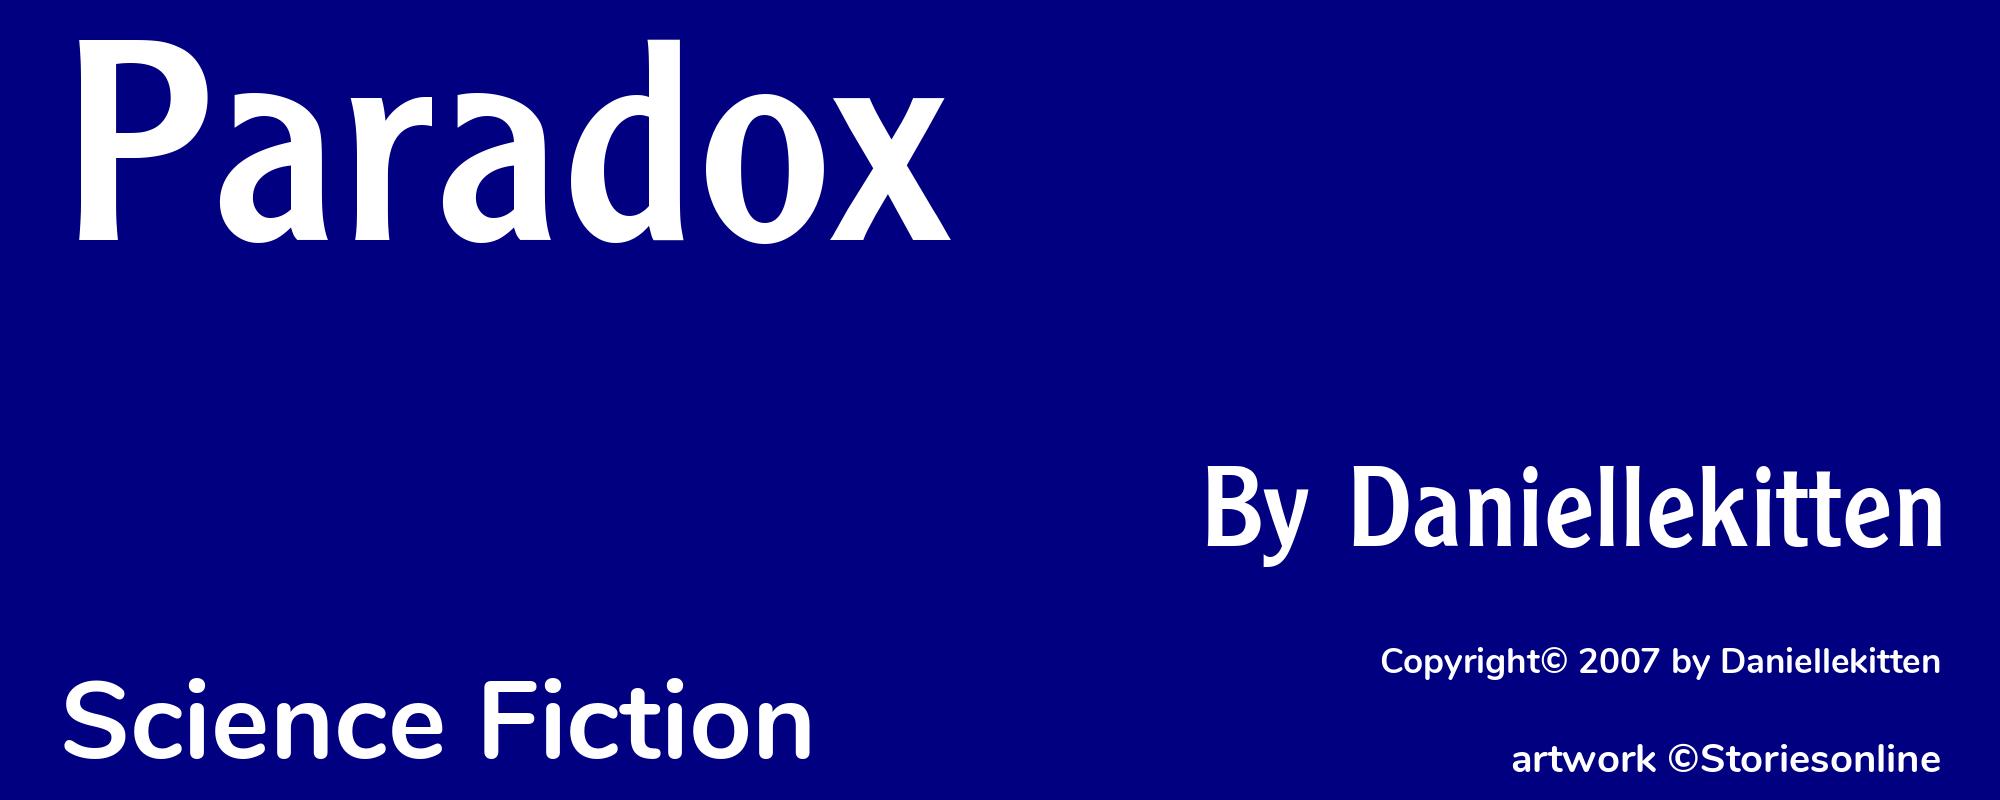 Paradox - Cover